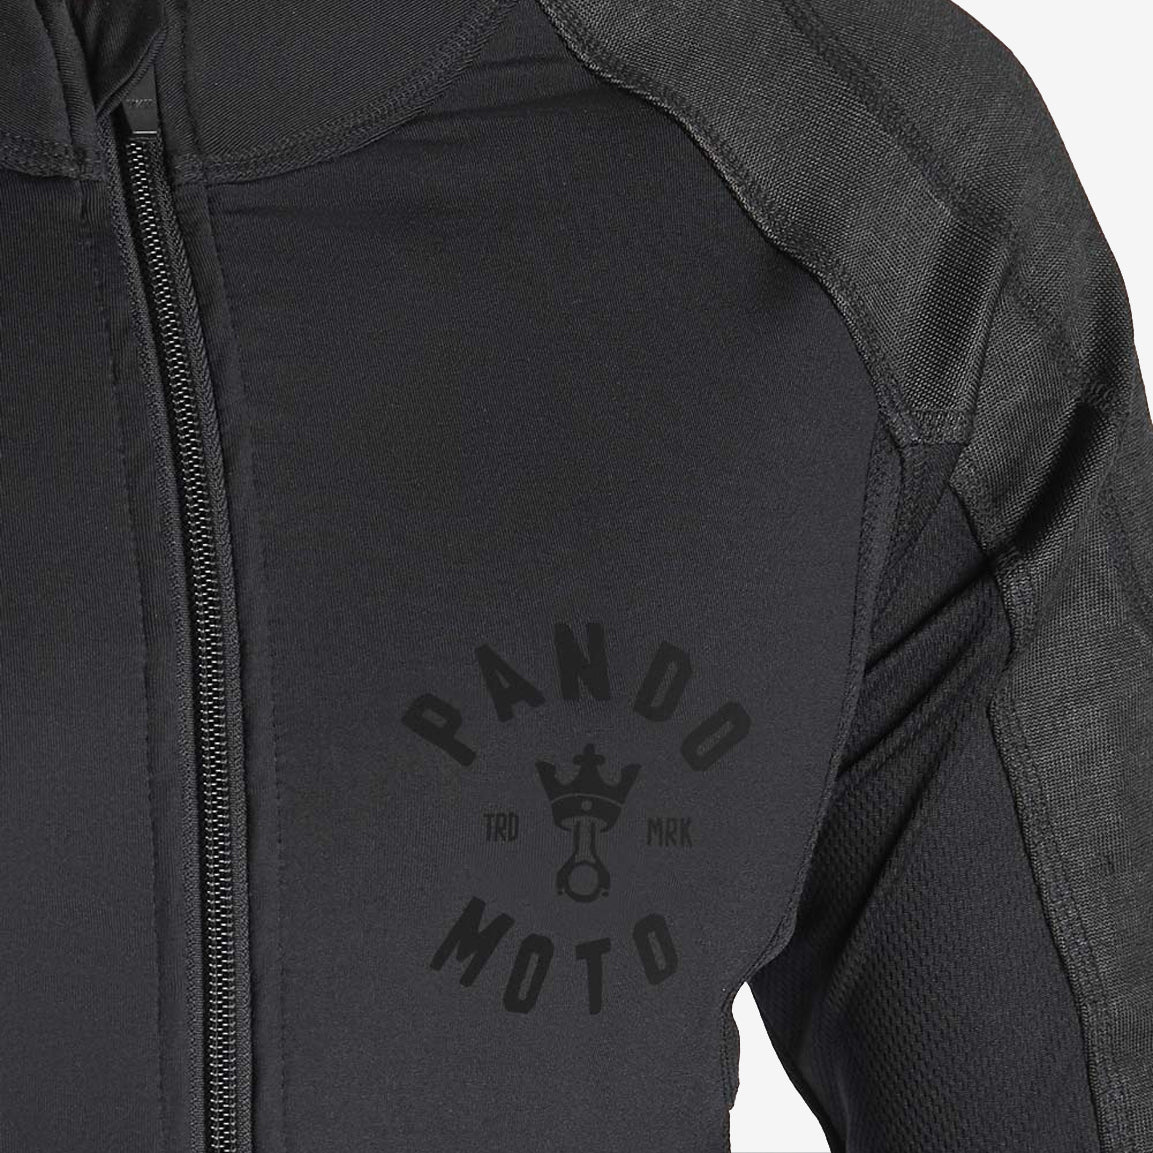 Pando Moto SHELL UH 02 Motorrad Protektoren-Unterwäsche | Riders Finest